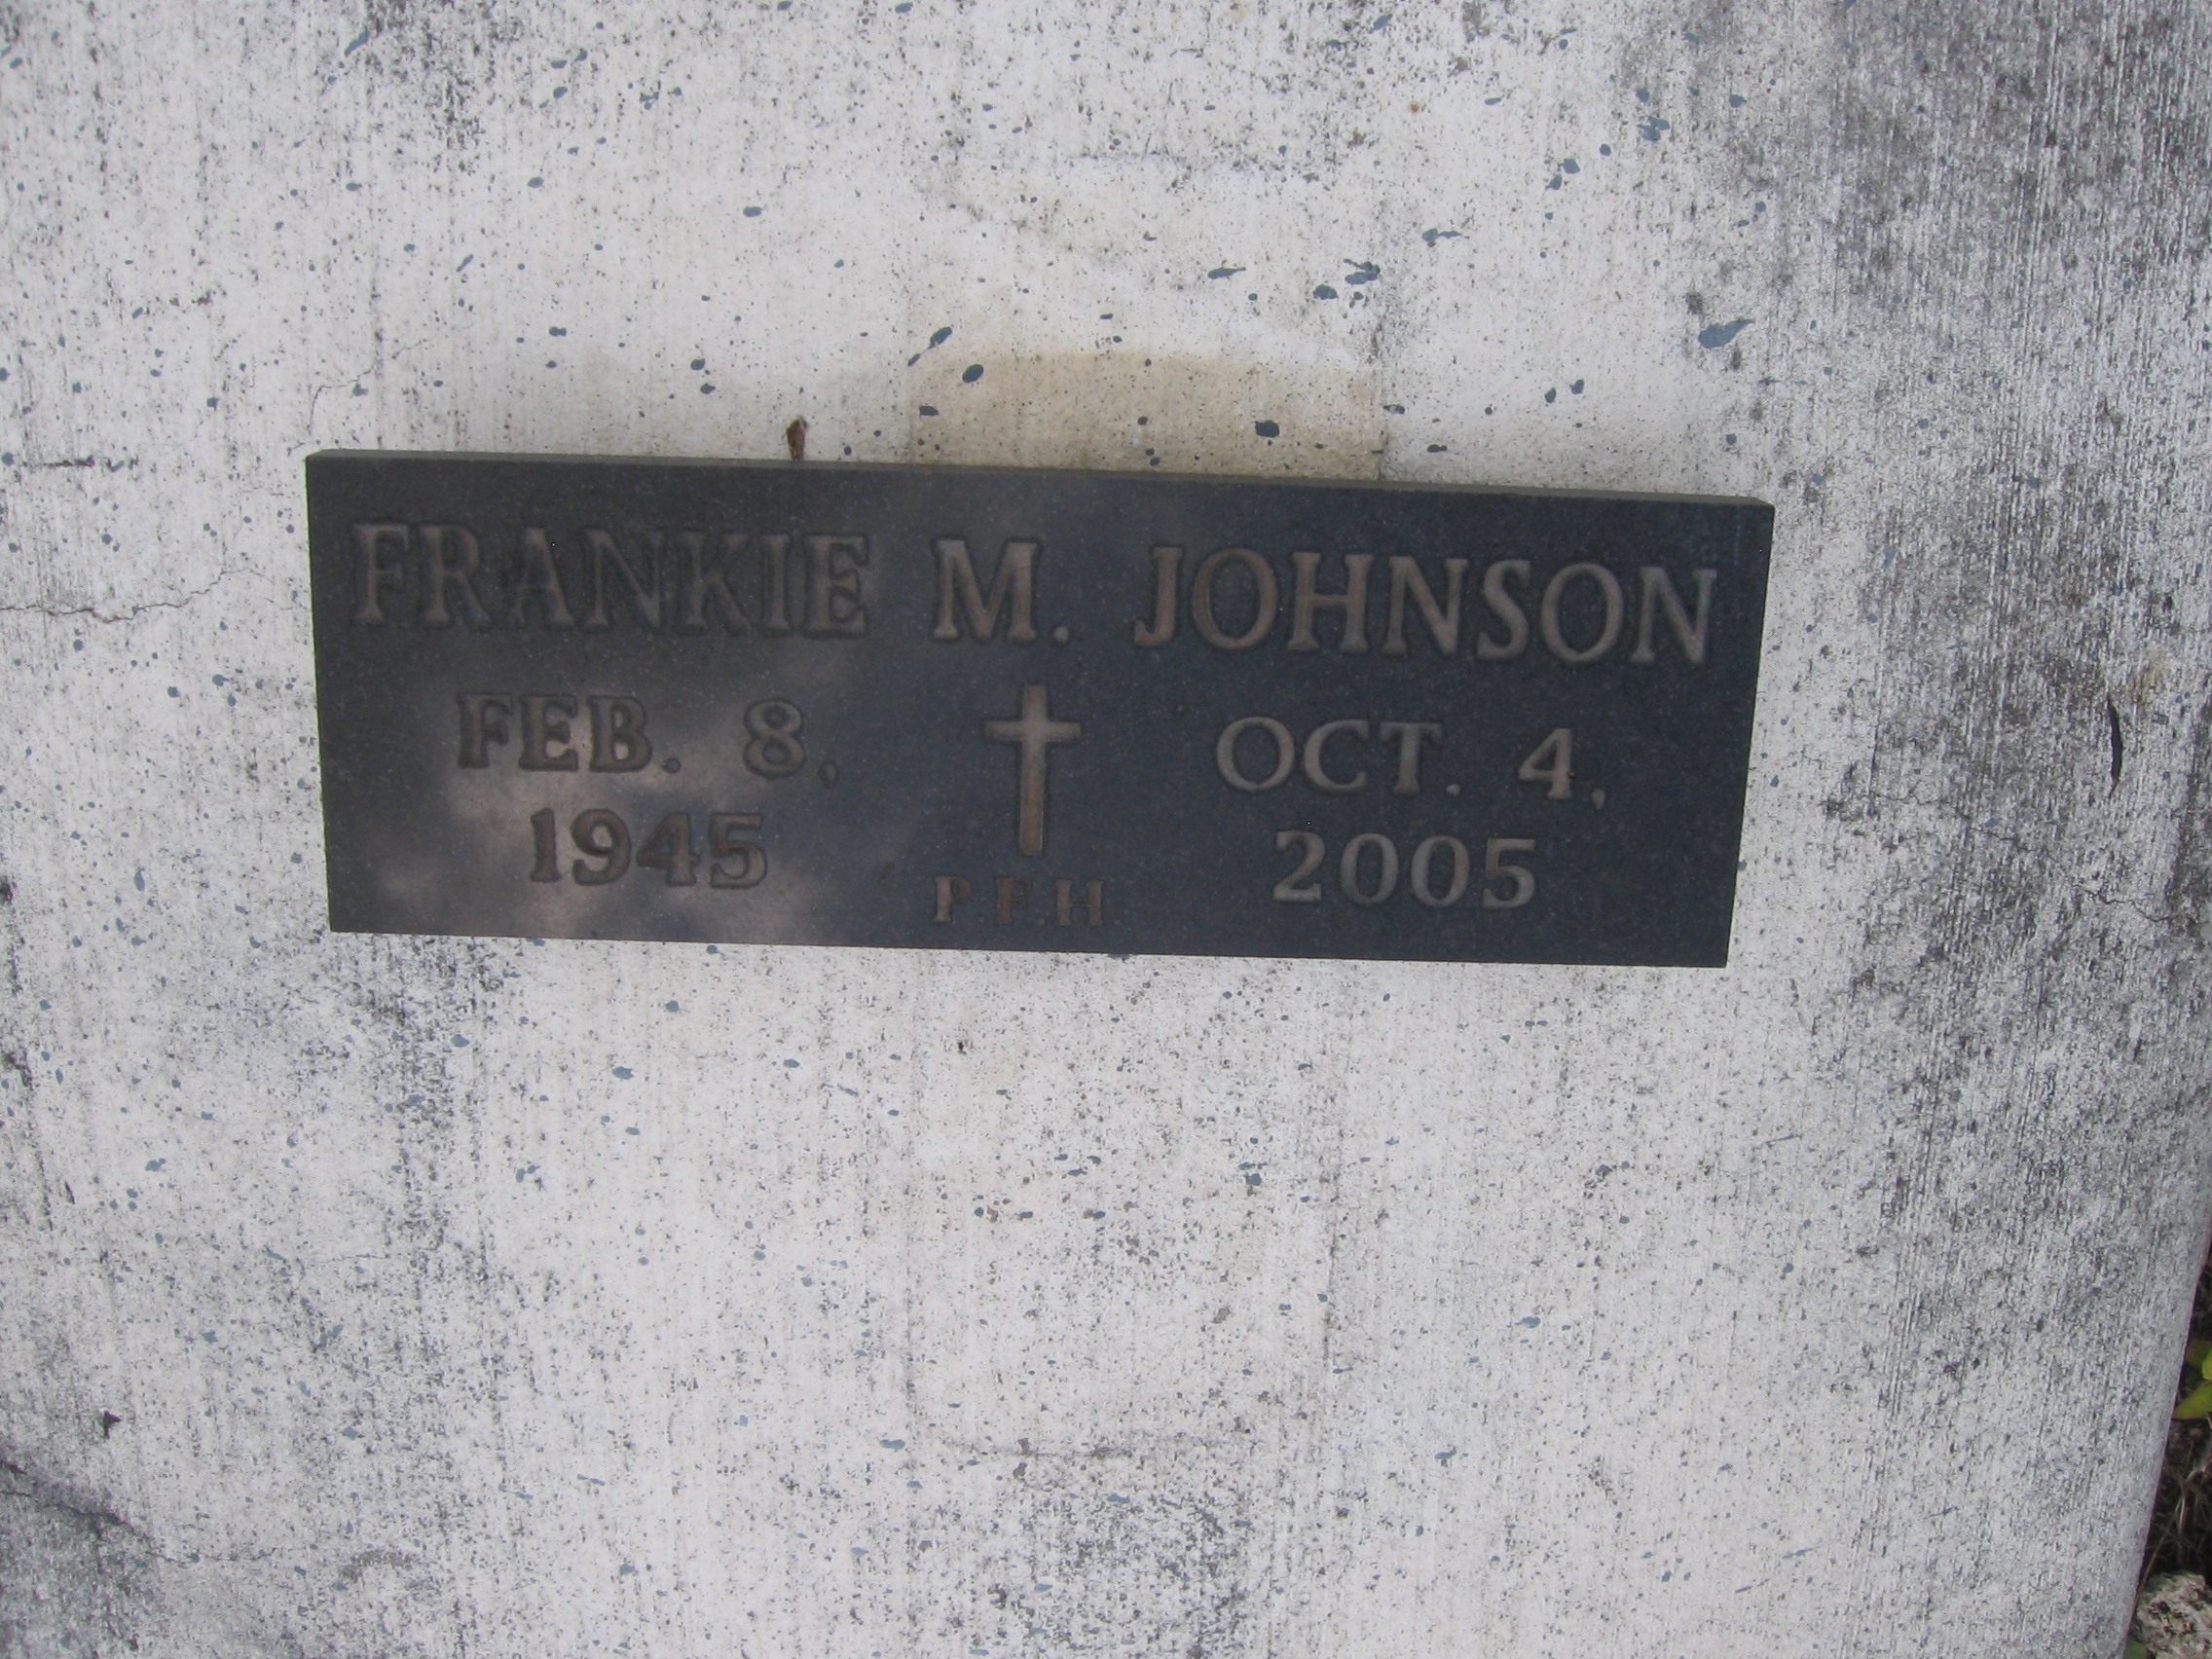 Frankie M Johnson